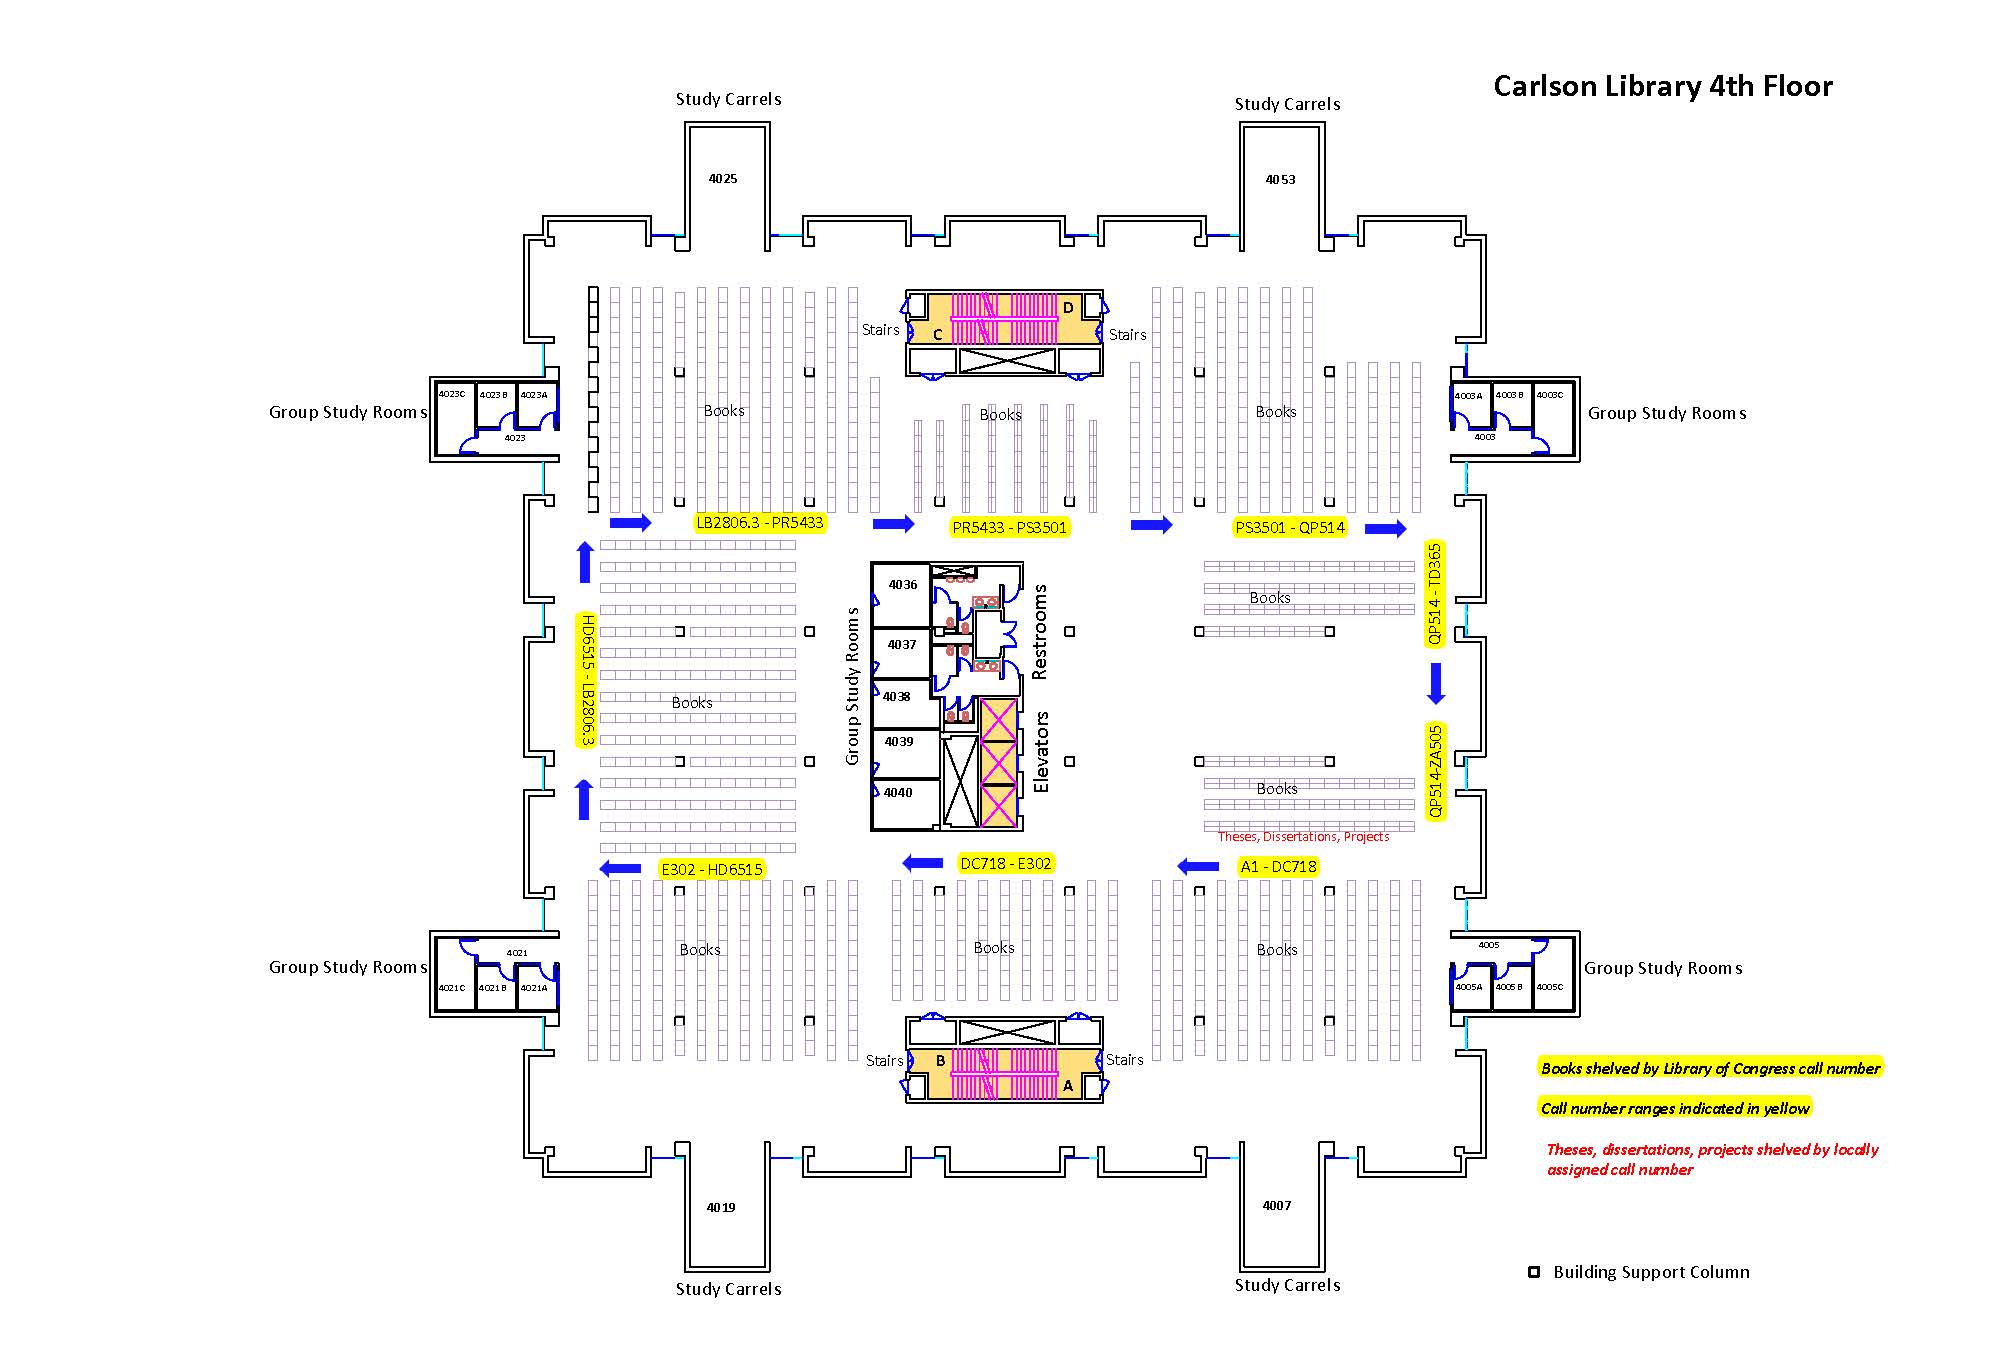 Carlson Library Fourth Floor Map